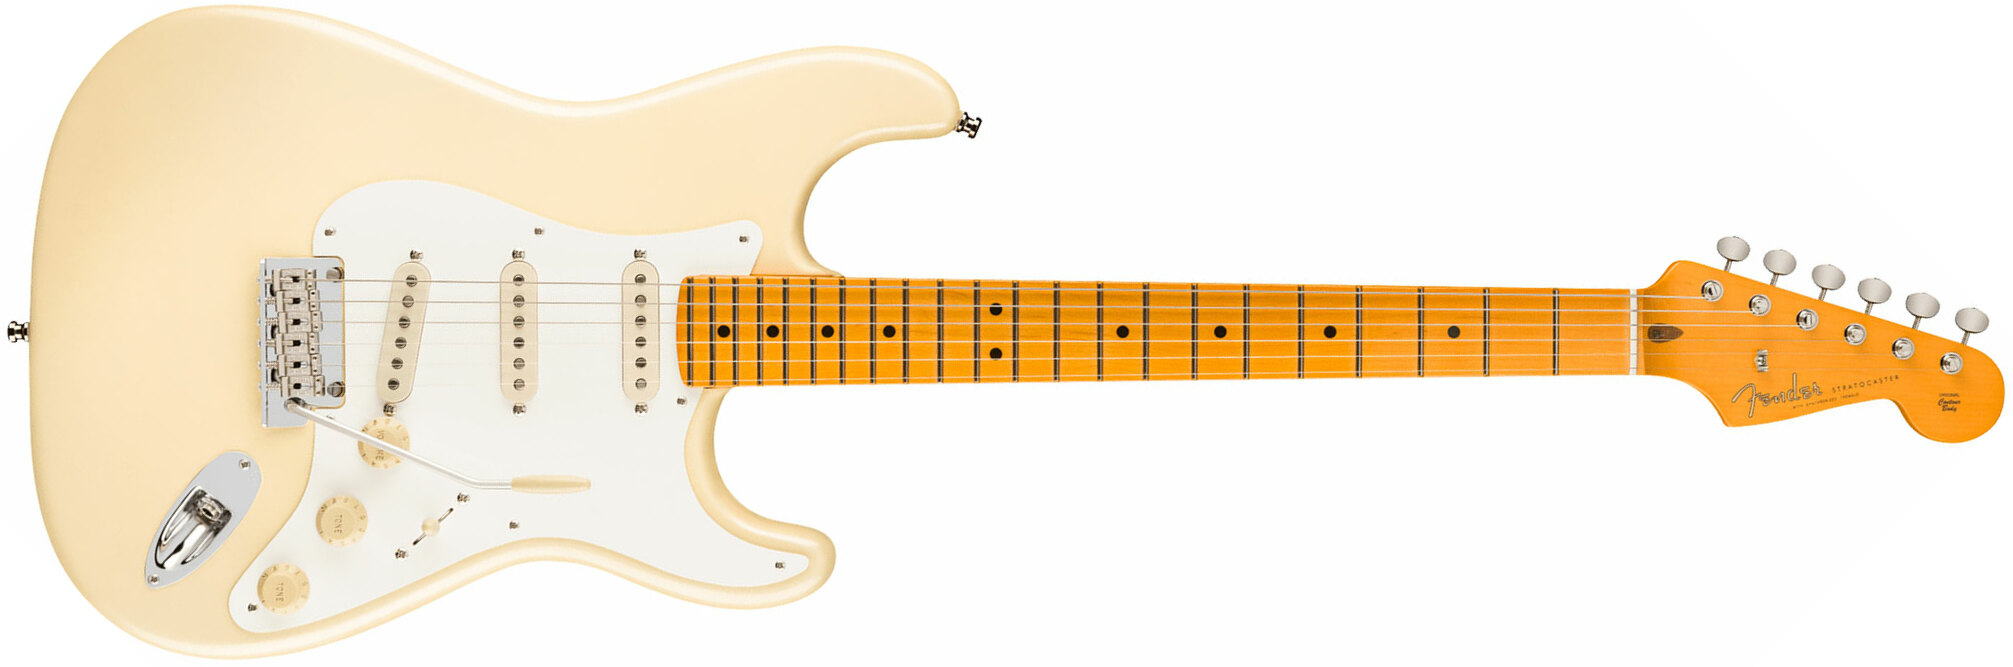 Fender Lincoln Brewster Strat Usa Signature 3s Dimarzio Trem Mn - Olympic Pearl - Retro rock electric guitar - Main picture